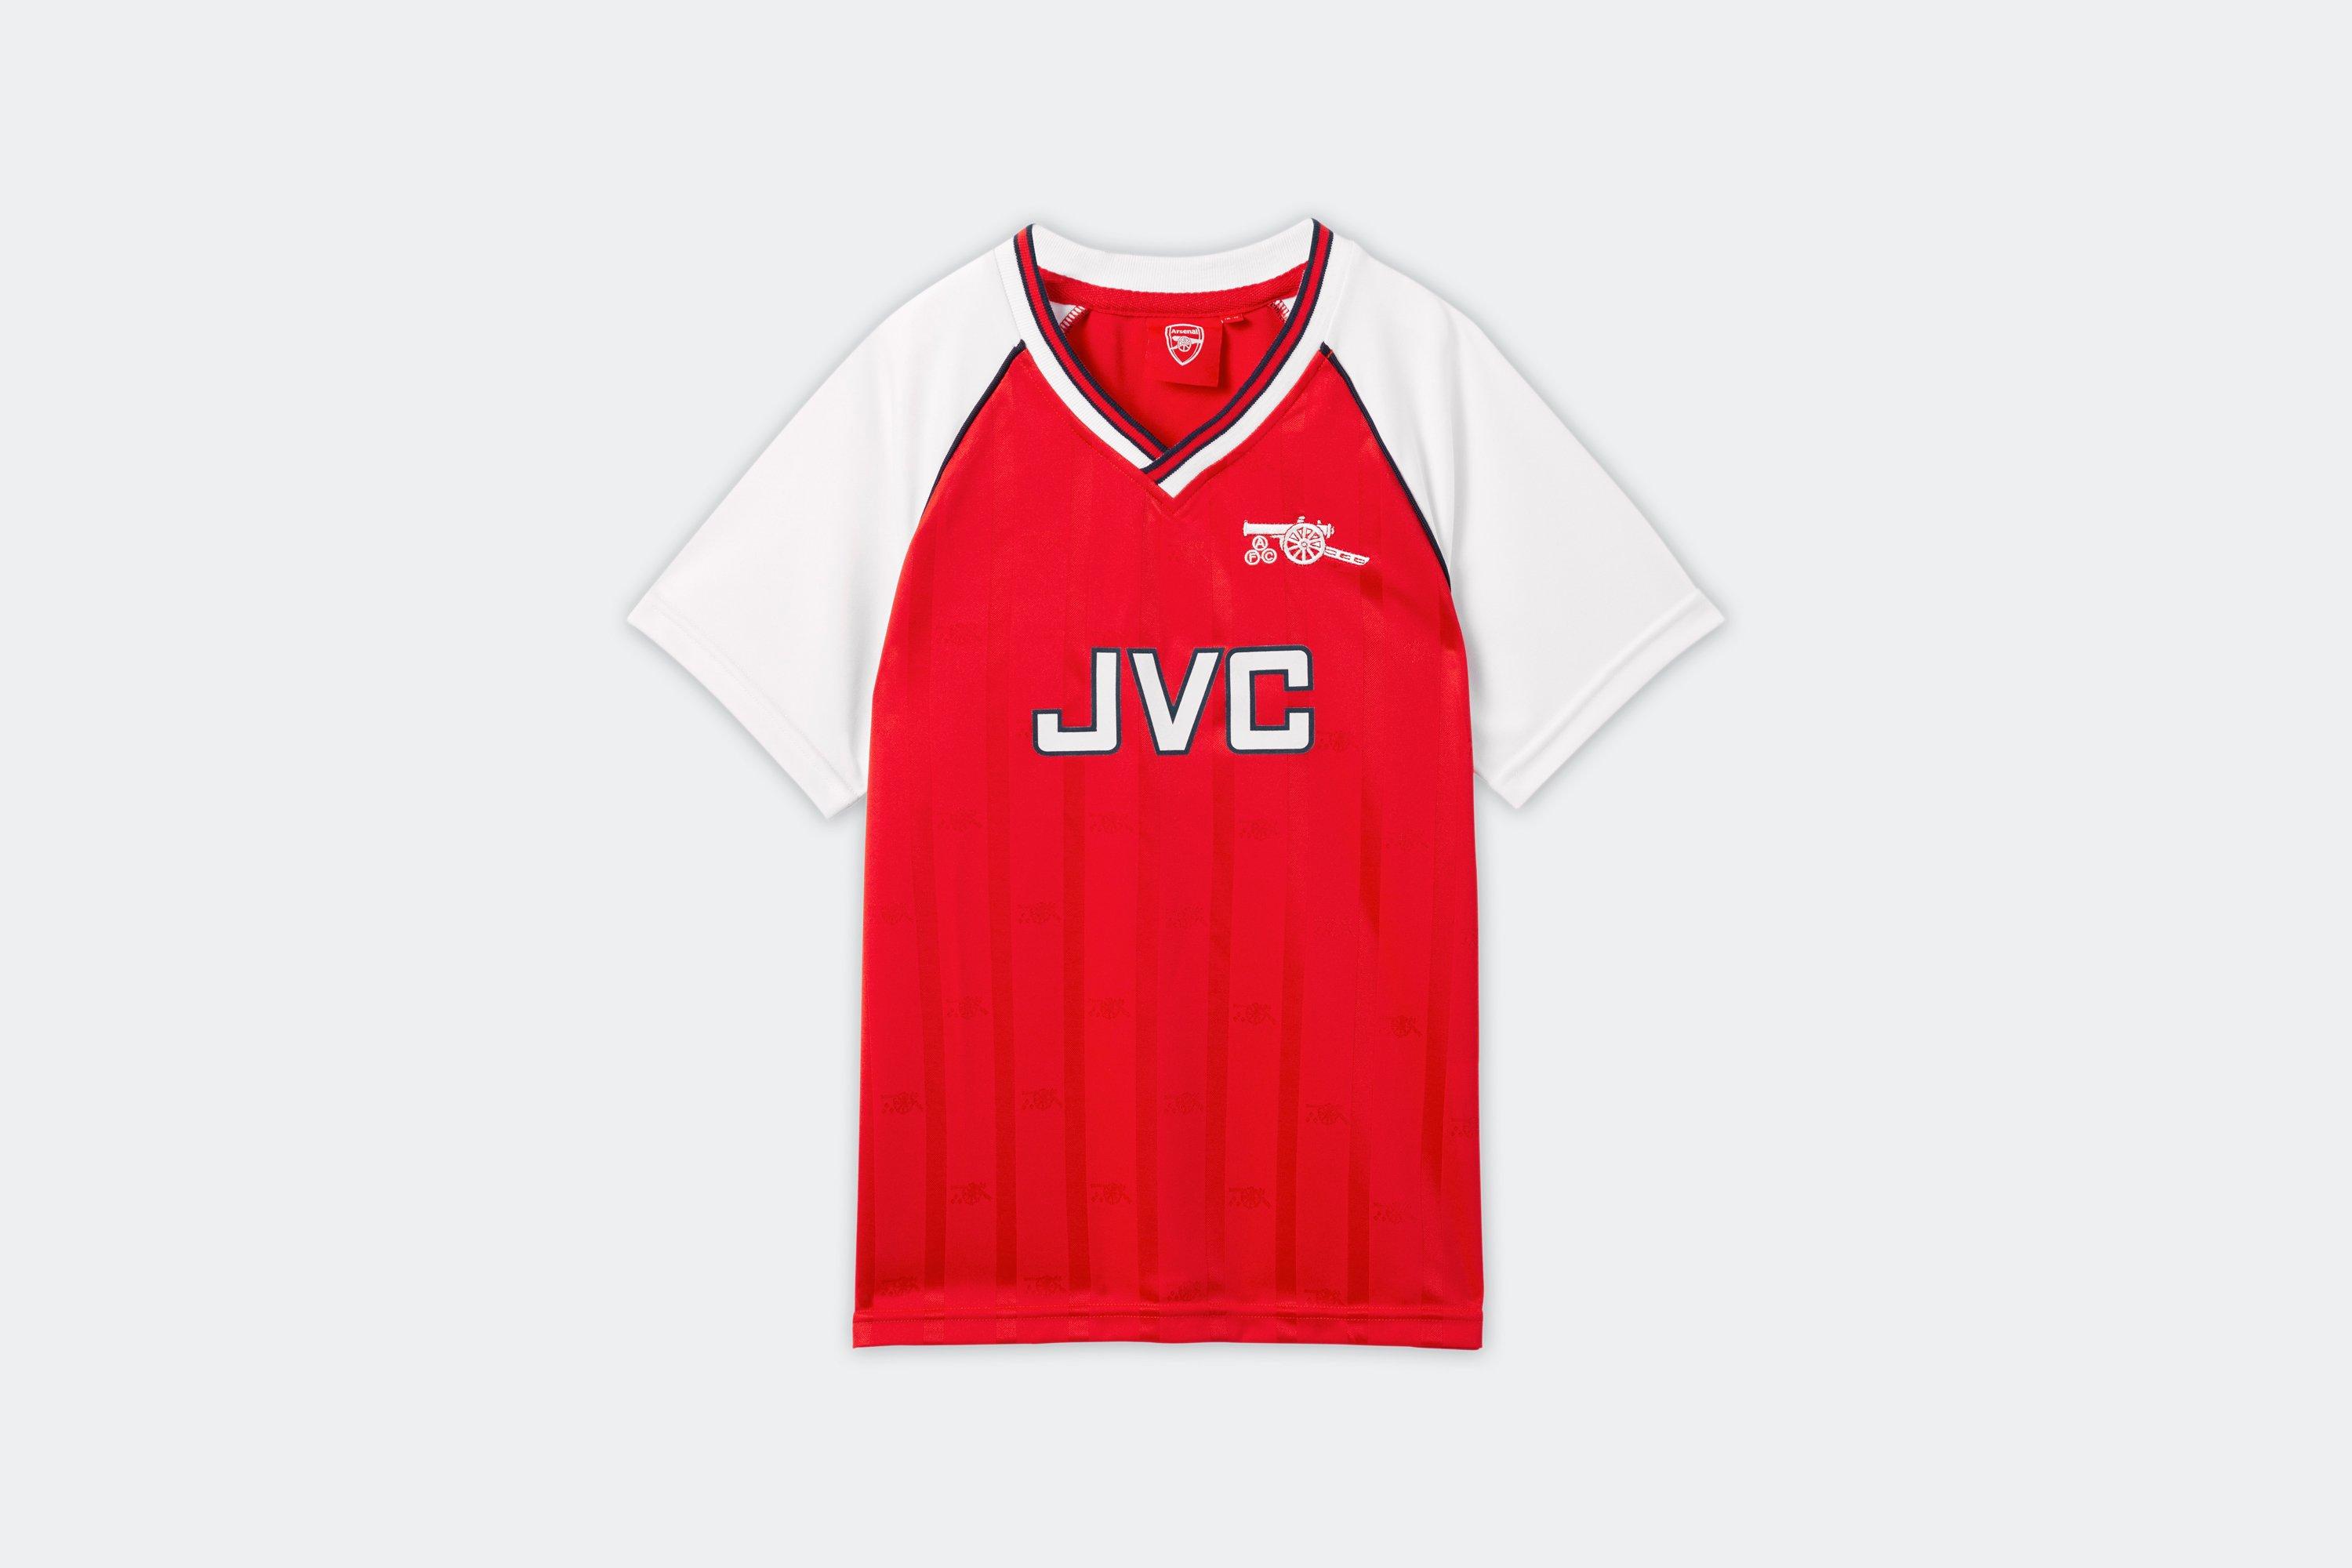 Arsenal Retro Shirts Personalised Birthday Card